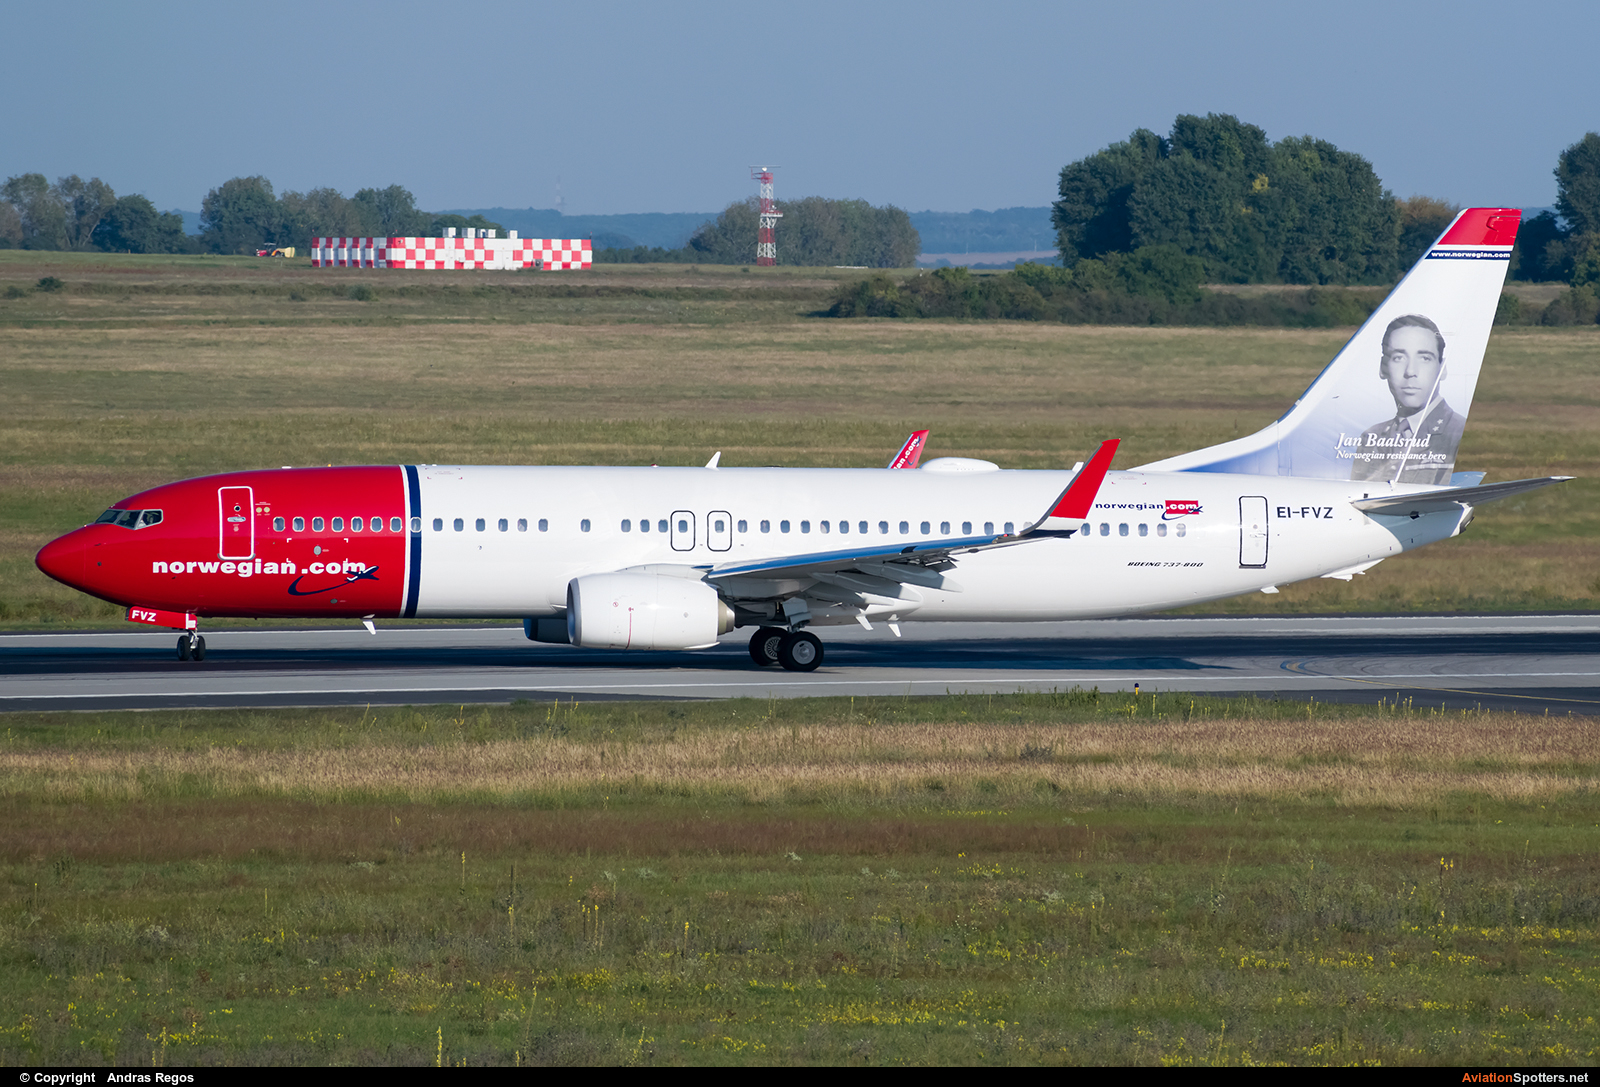 Norwegian Air Shuttle  -  737-800  (EI-FVZ) By Andras Regos (regos)